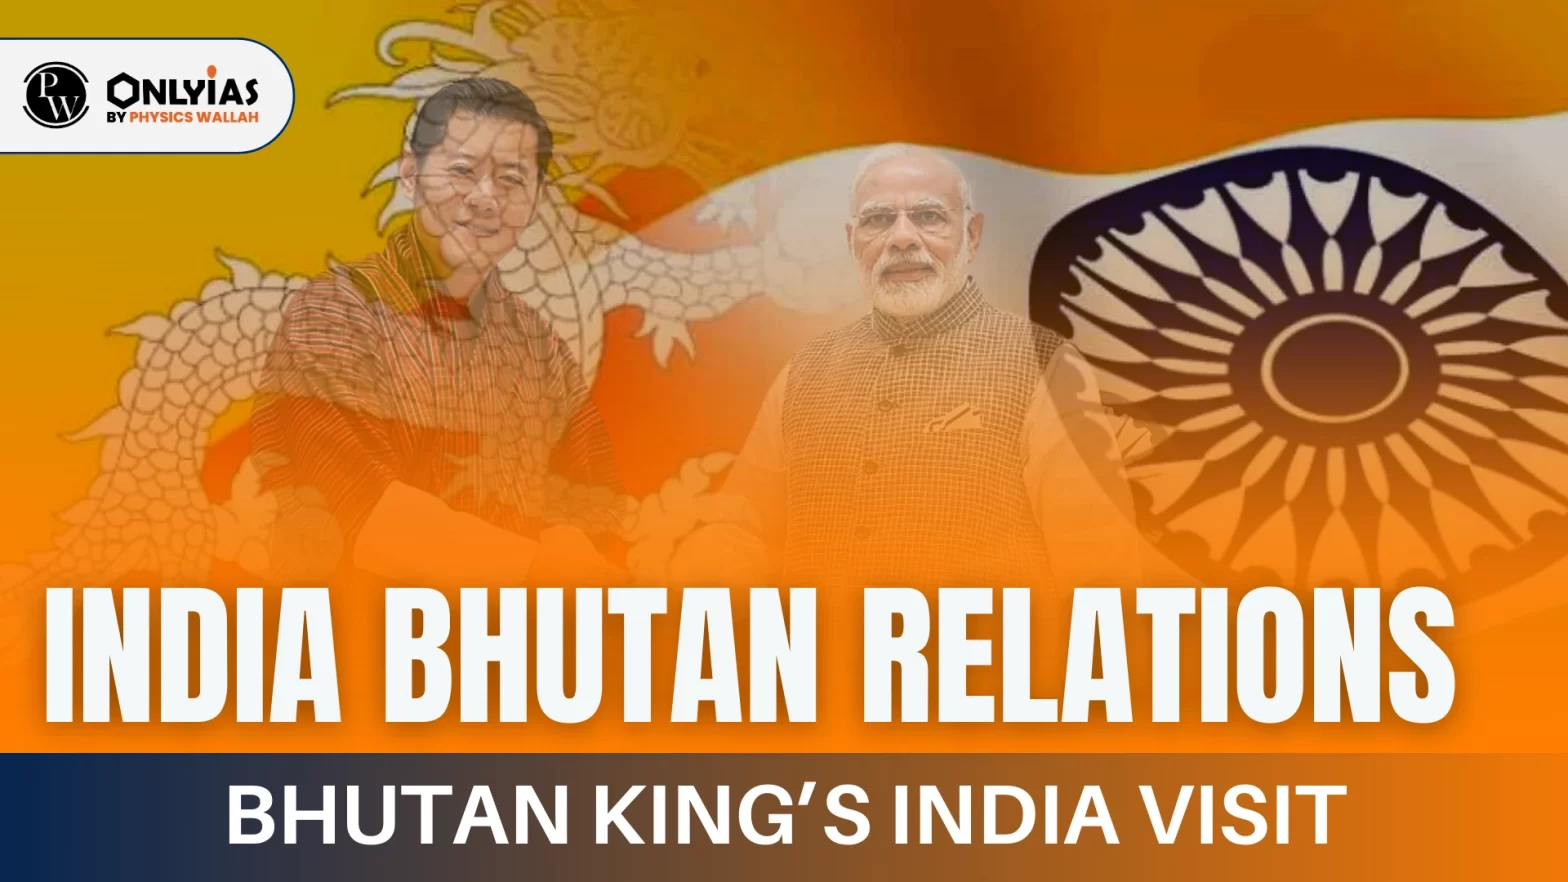 India Bhutan Relations – Bhutan King’s India Visit